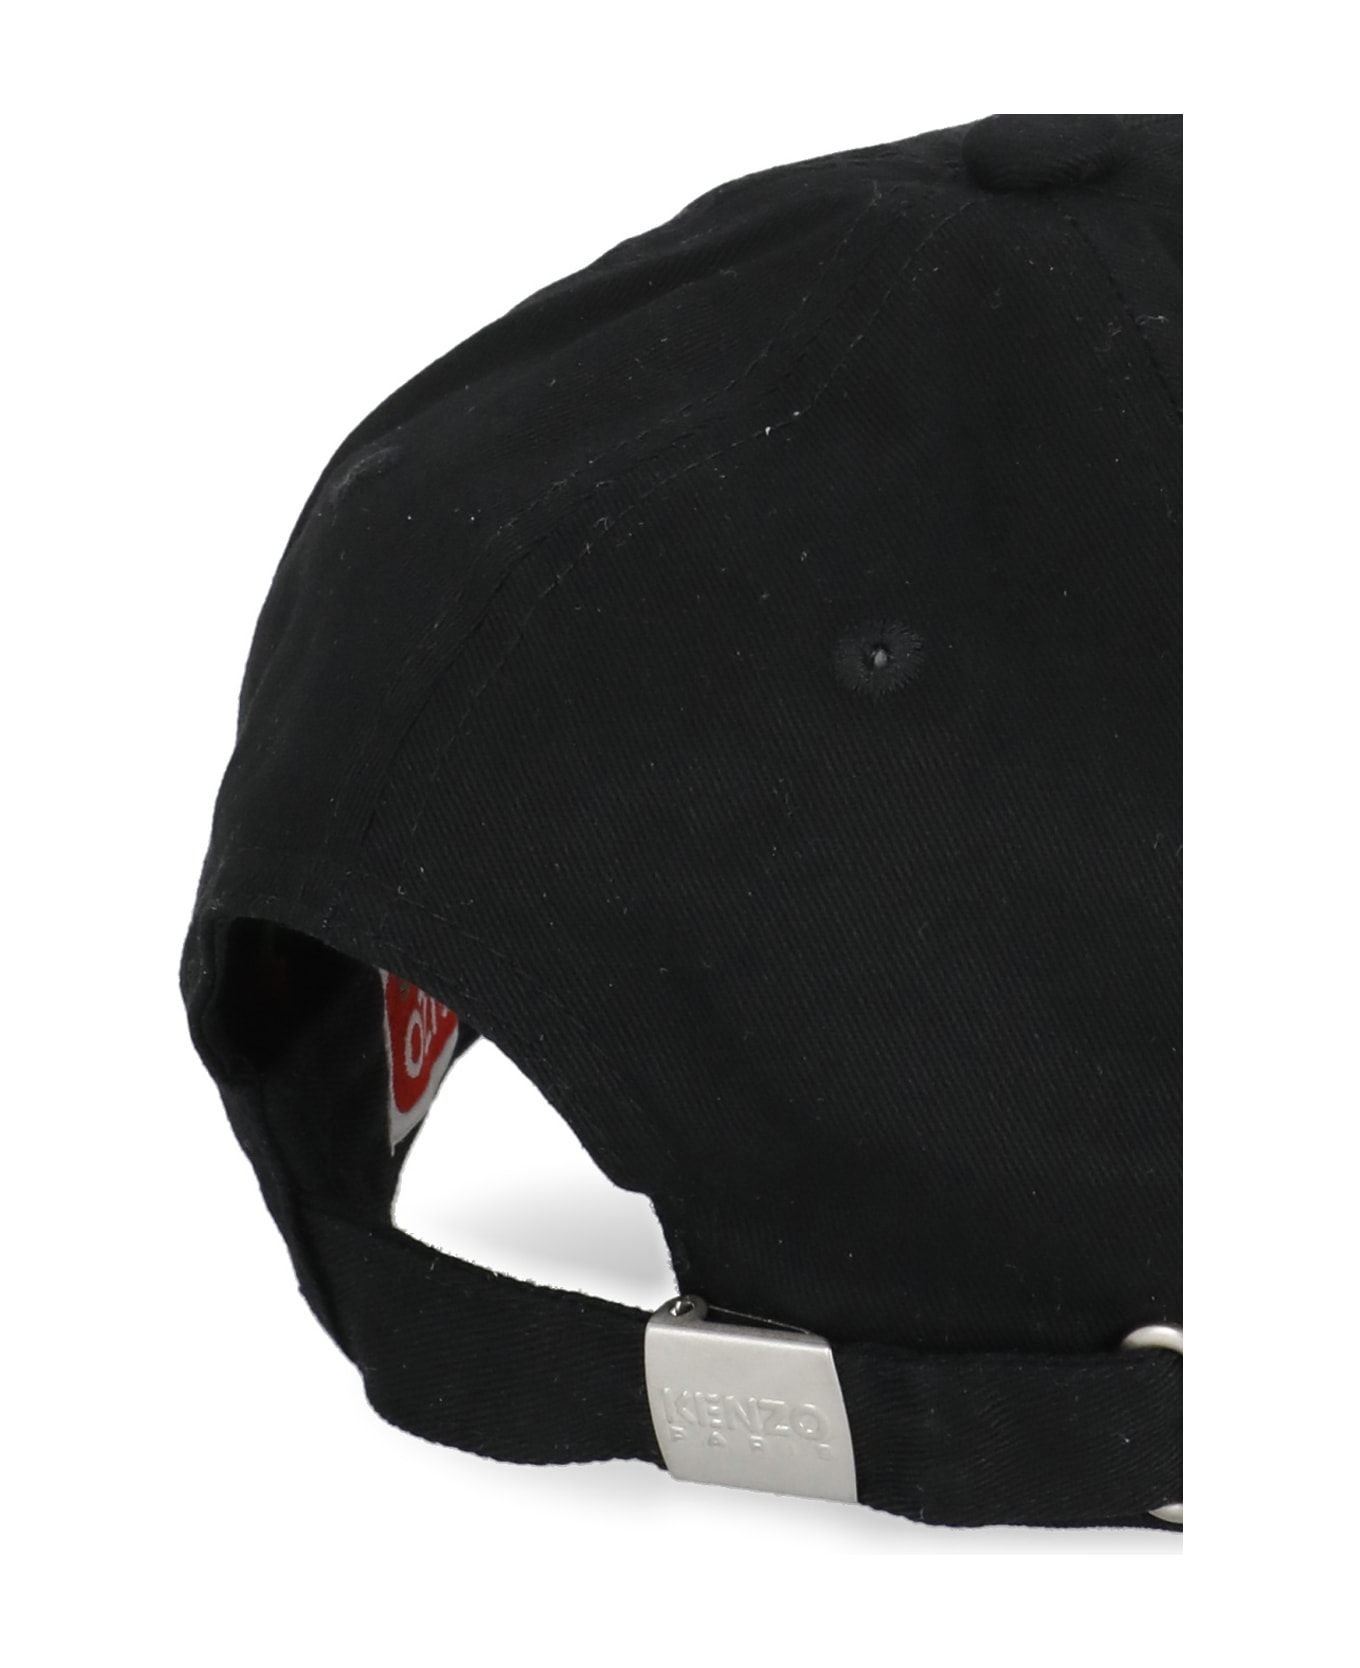 Kenzo Utility Baseball Cap - Black 帽子